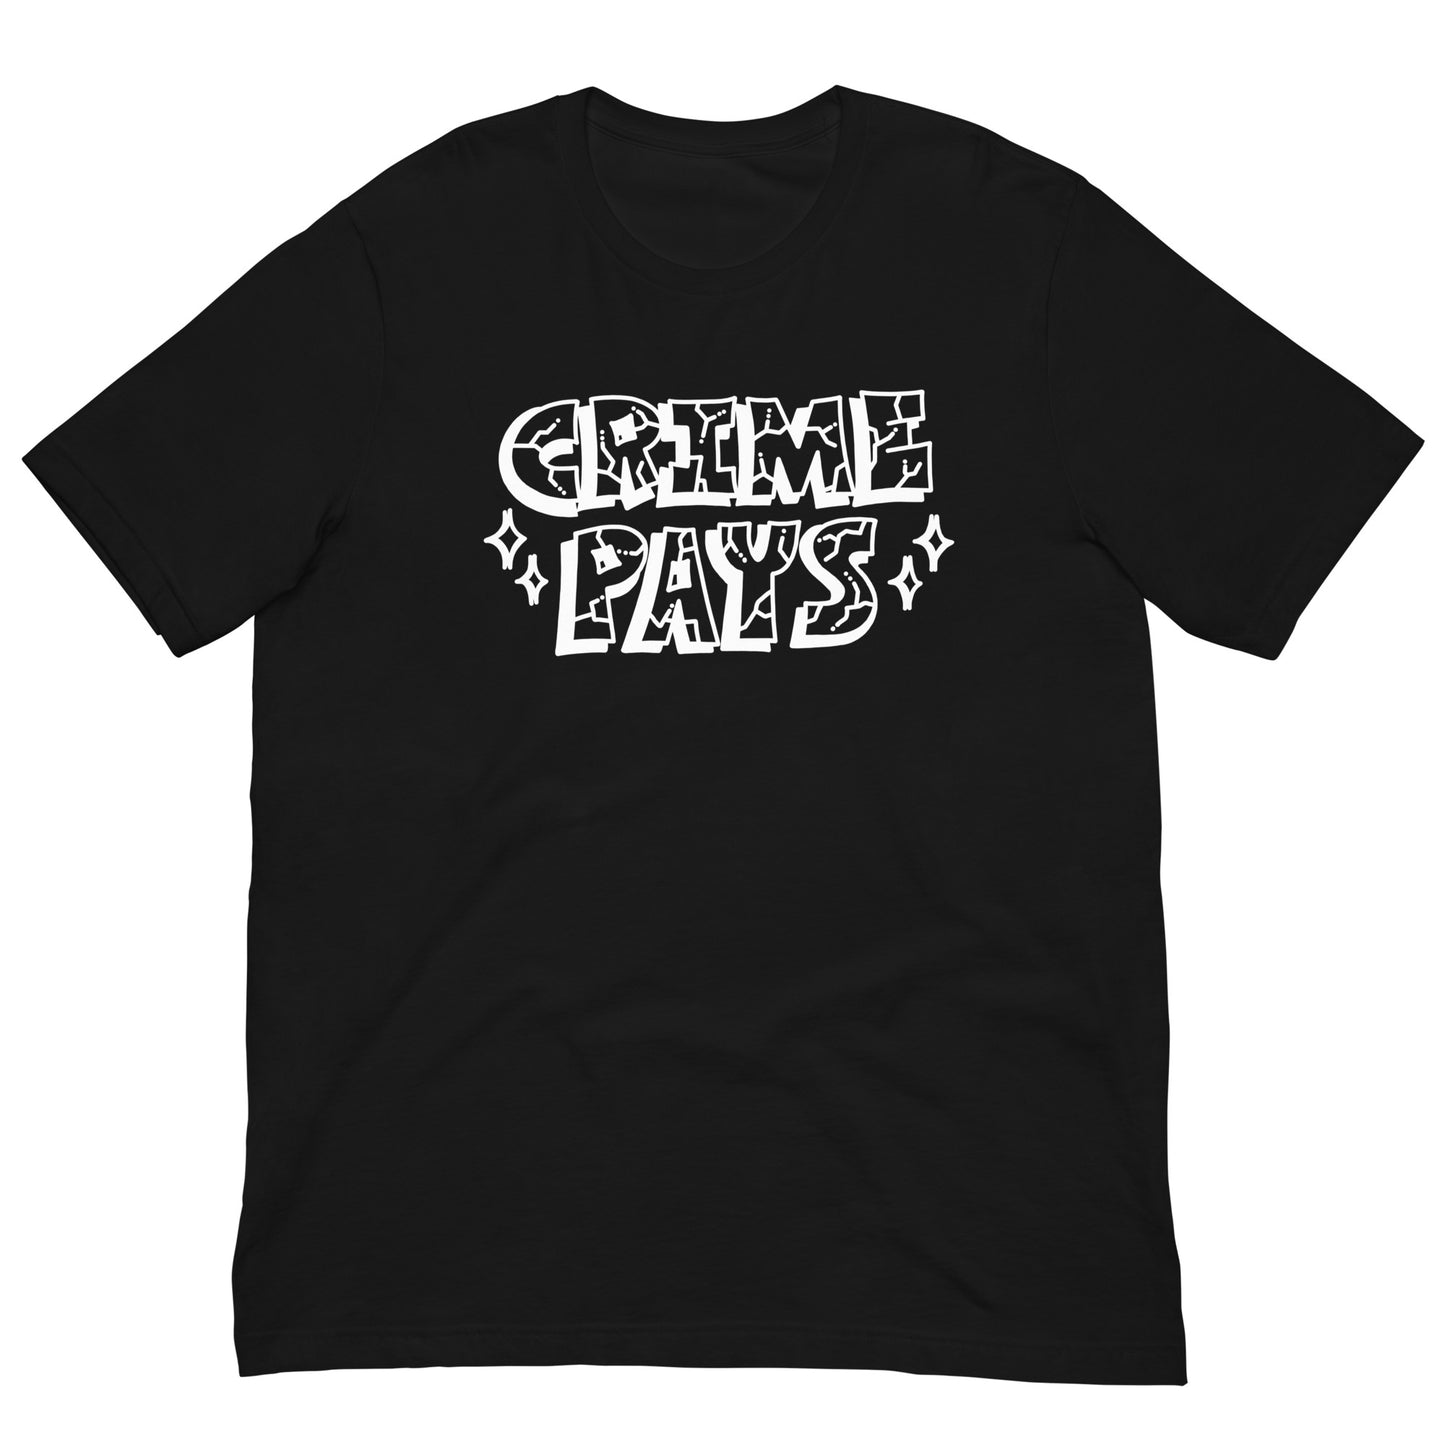 Crime pays t-shirt black